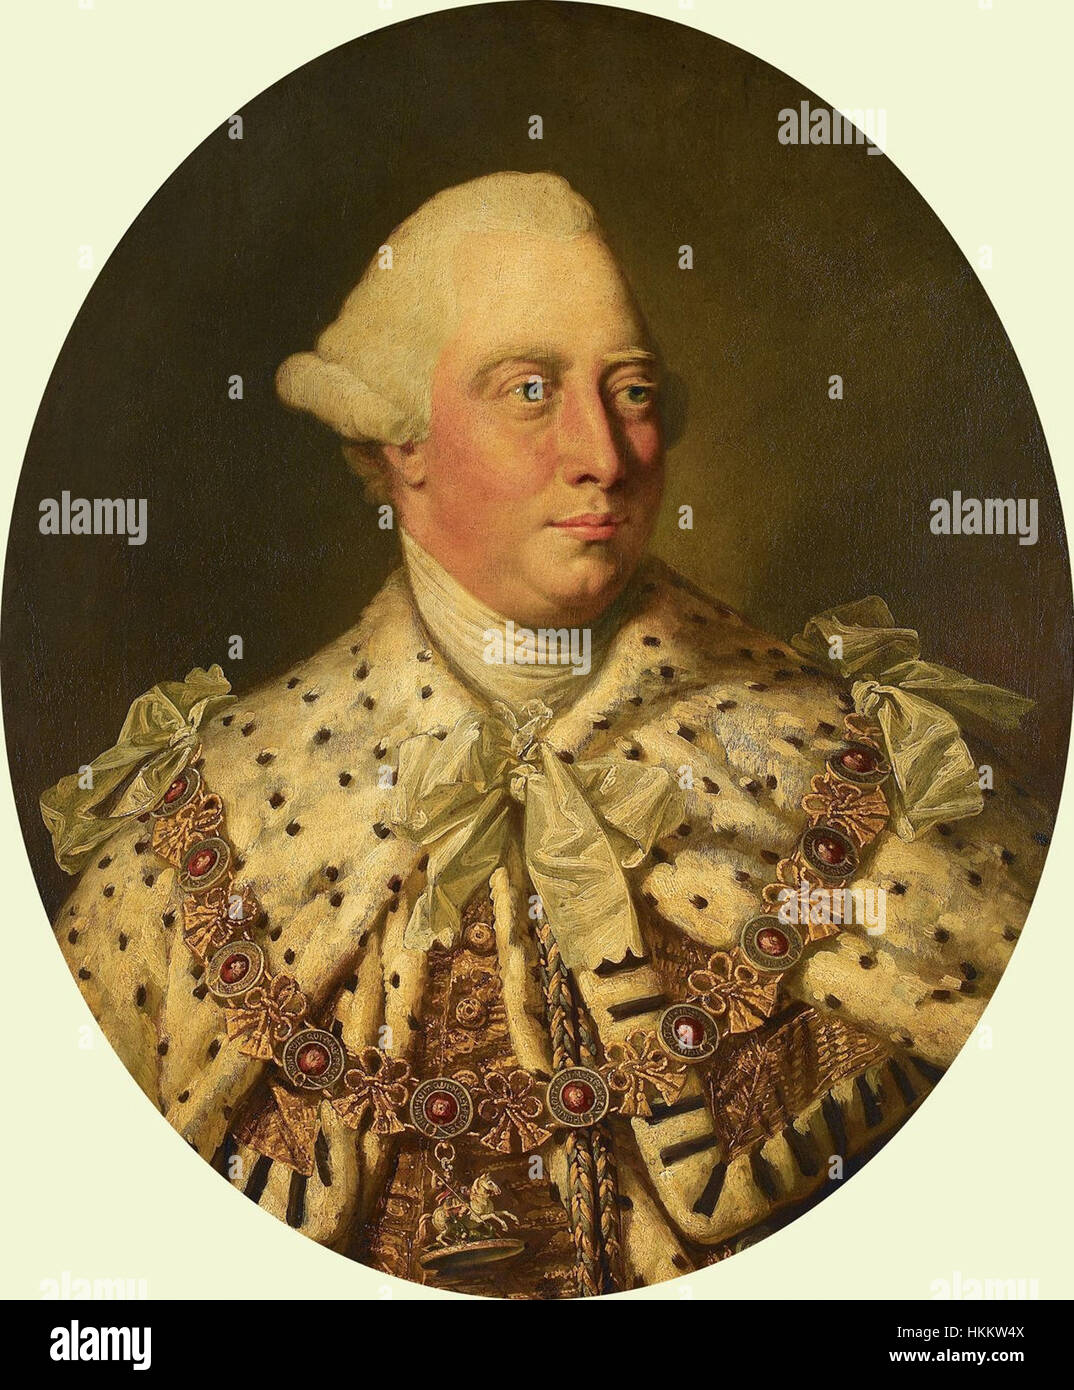 George III of the United Kingdom 402939 Stock Photo